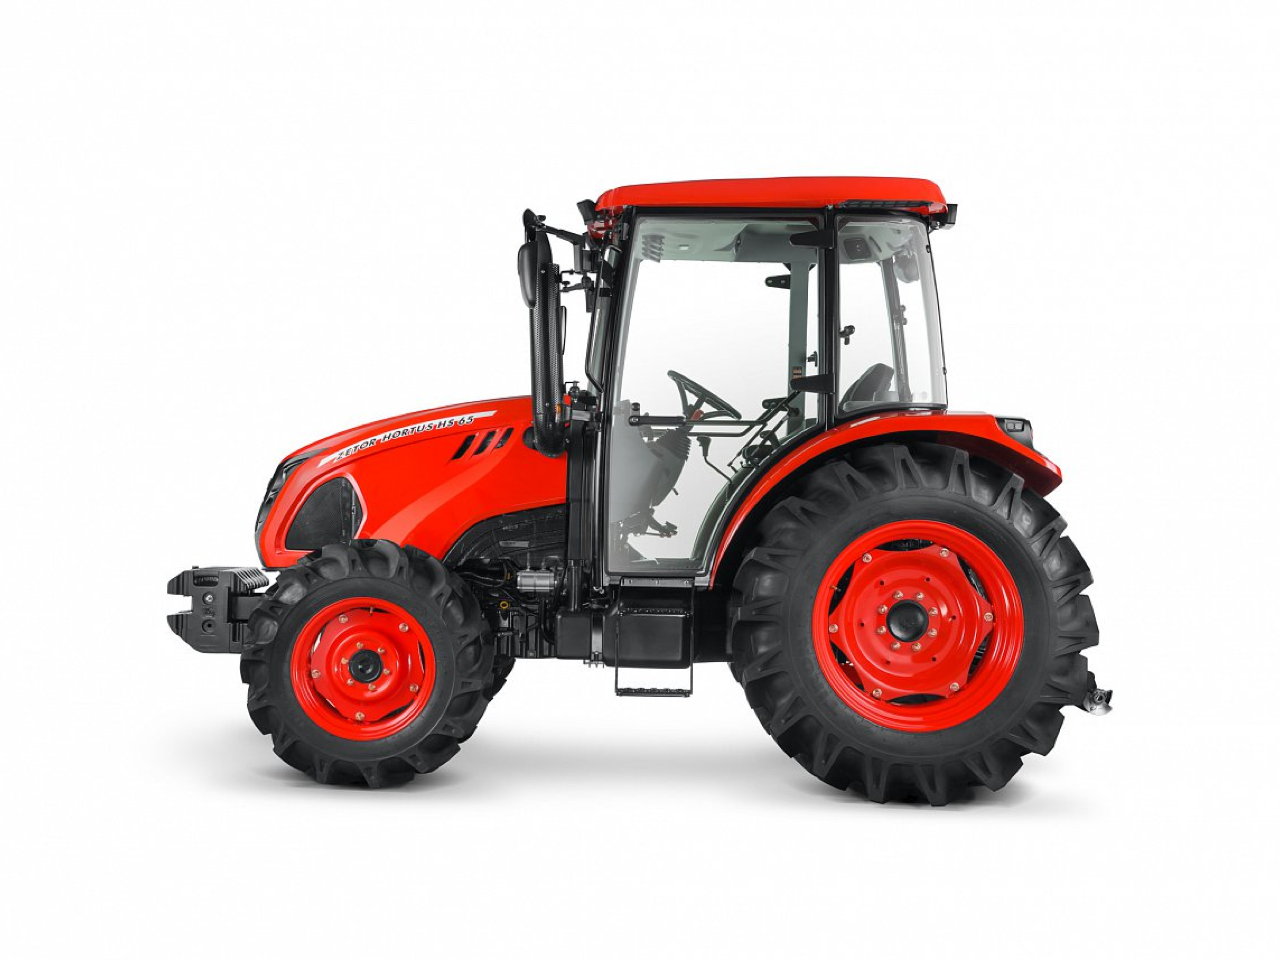 Zetor Hortus CL 65 Tractor Price Specs Review